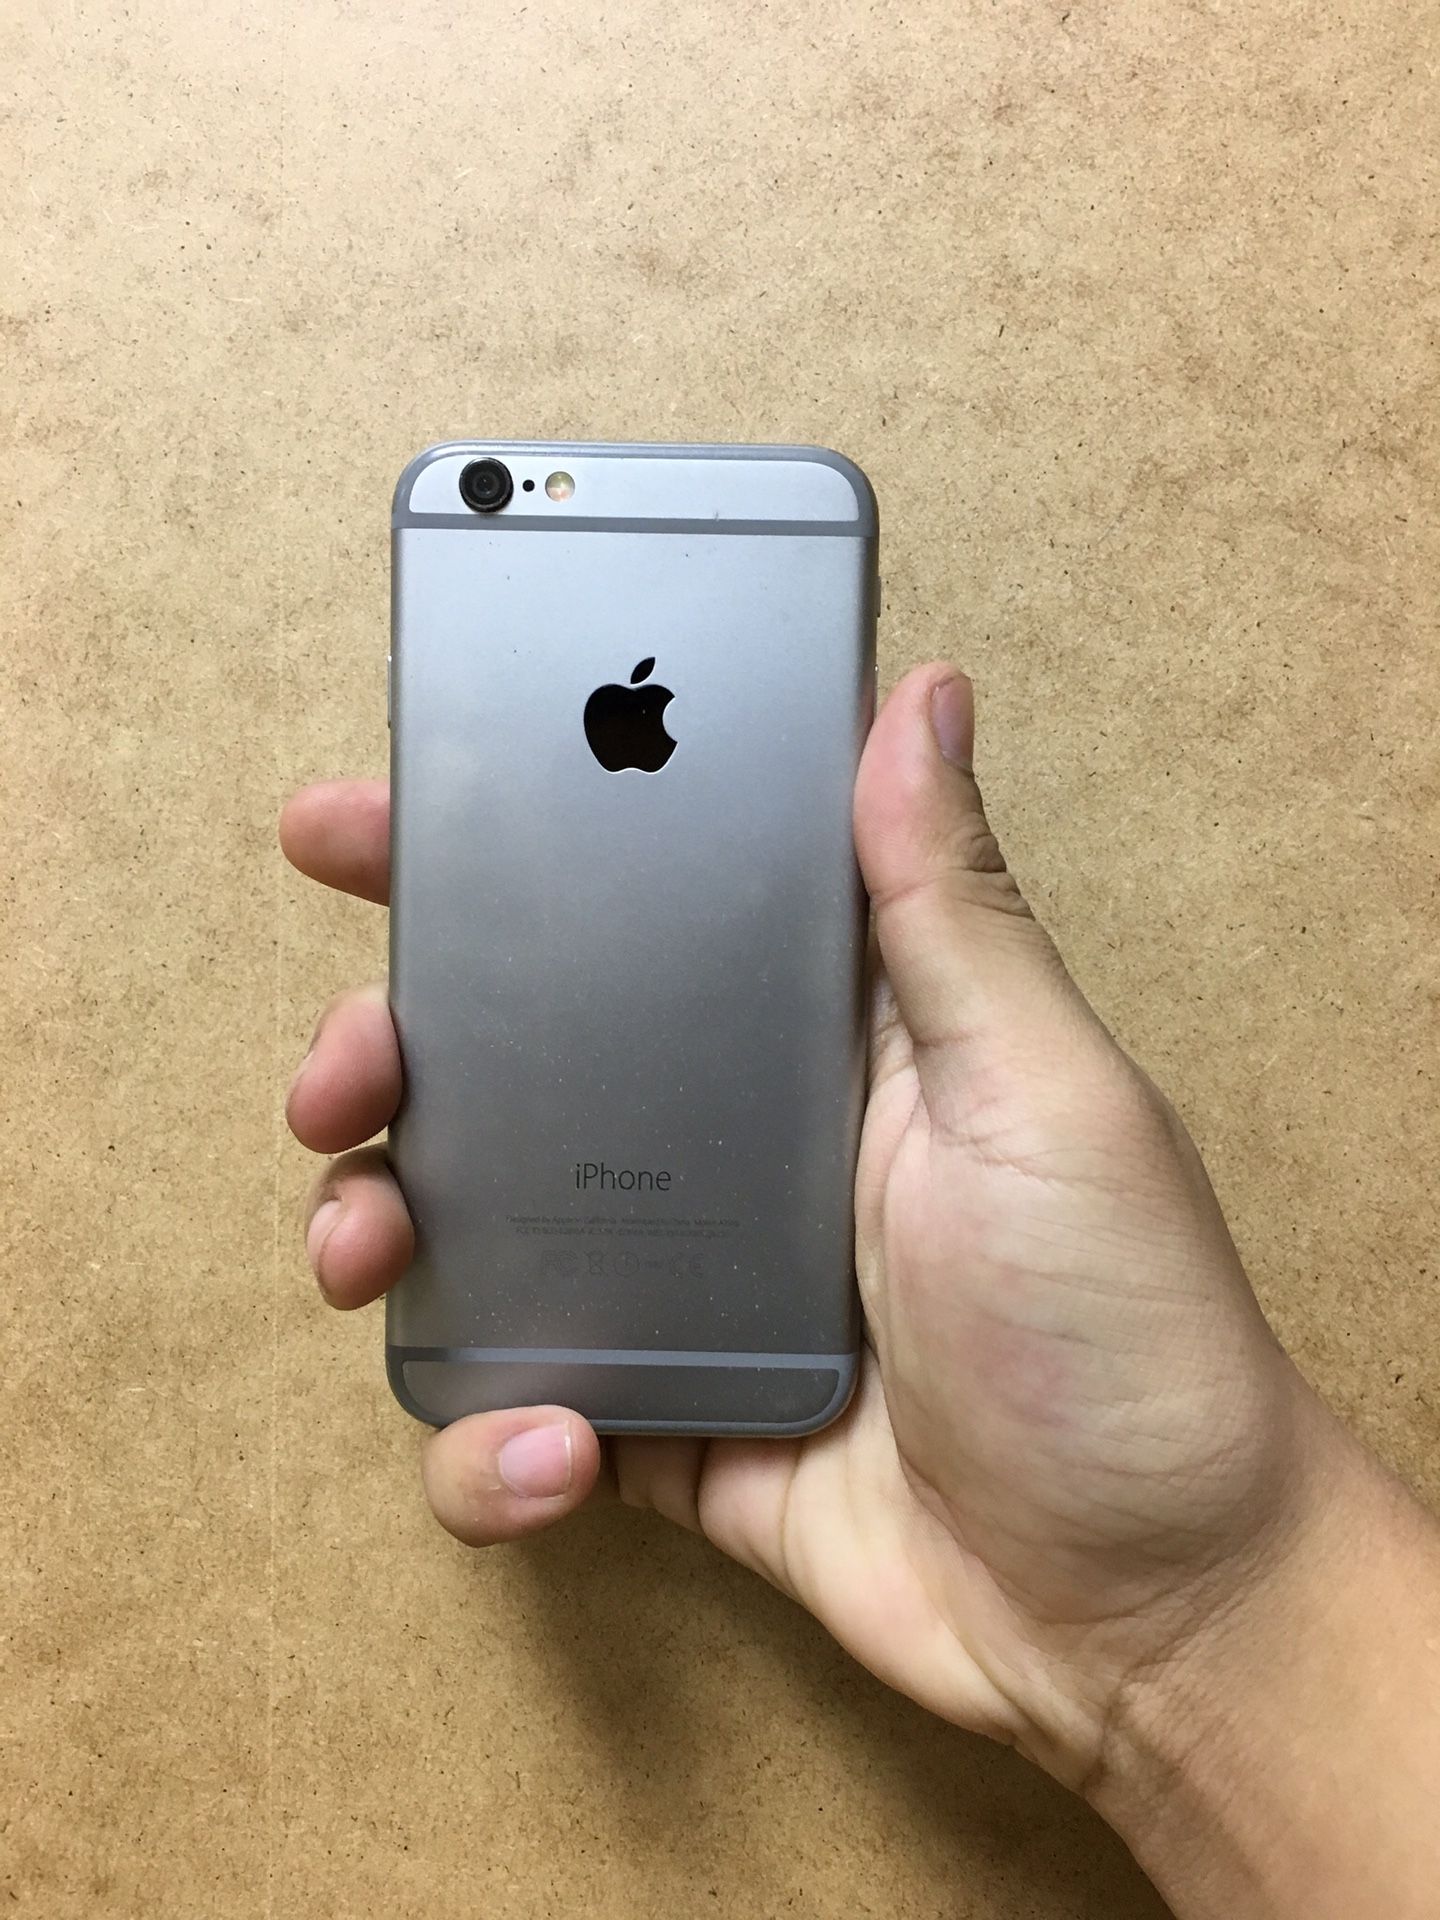 iPhone 6 64gb factory unlocked, iphone AT&T, T-Mobile,Cricket Metro pcs, Verizon, Straight talk Simple mobile, unlocked, iphone